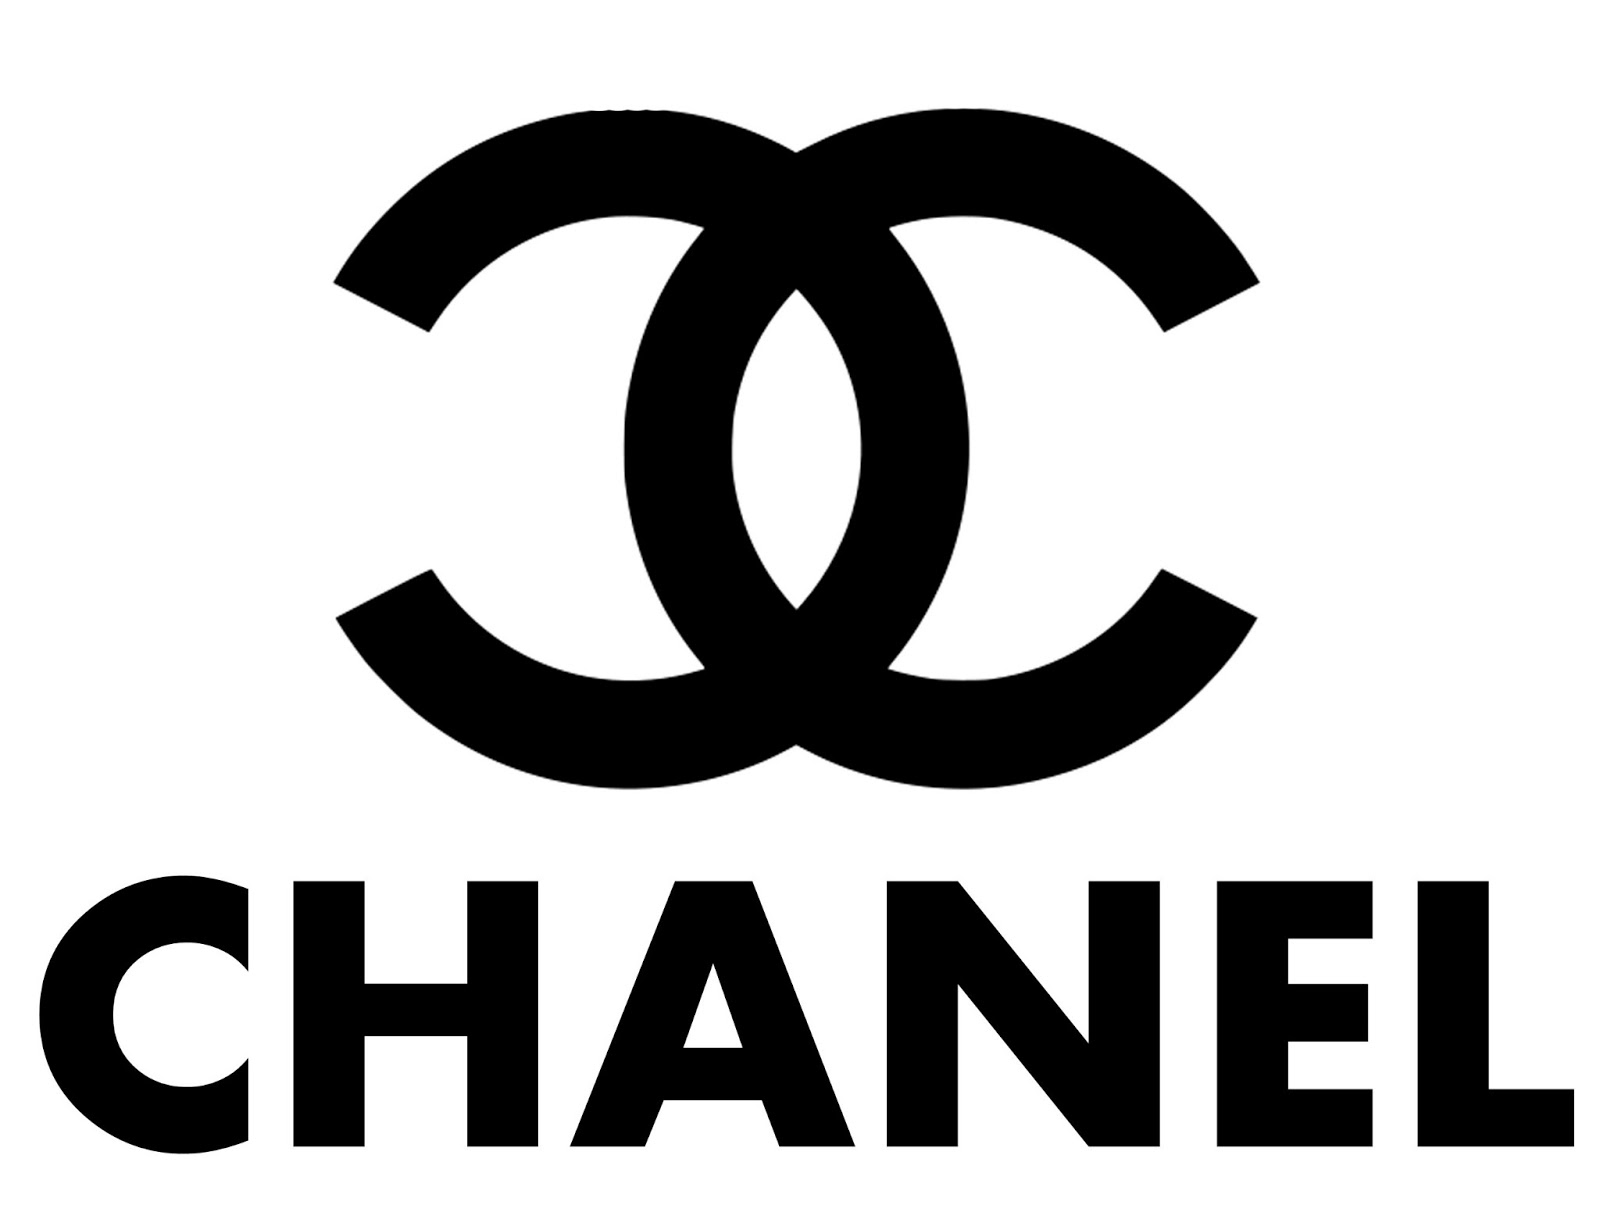 Download Chanel Logo Image HQ PNG Image  FreePNGImg